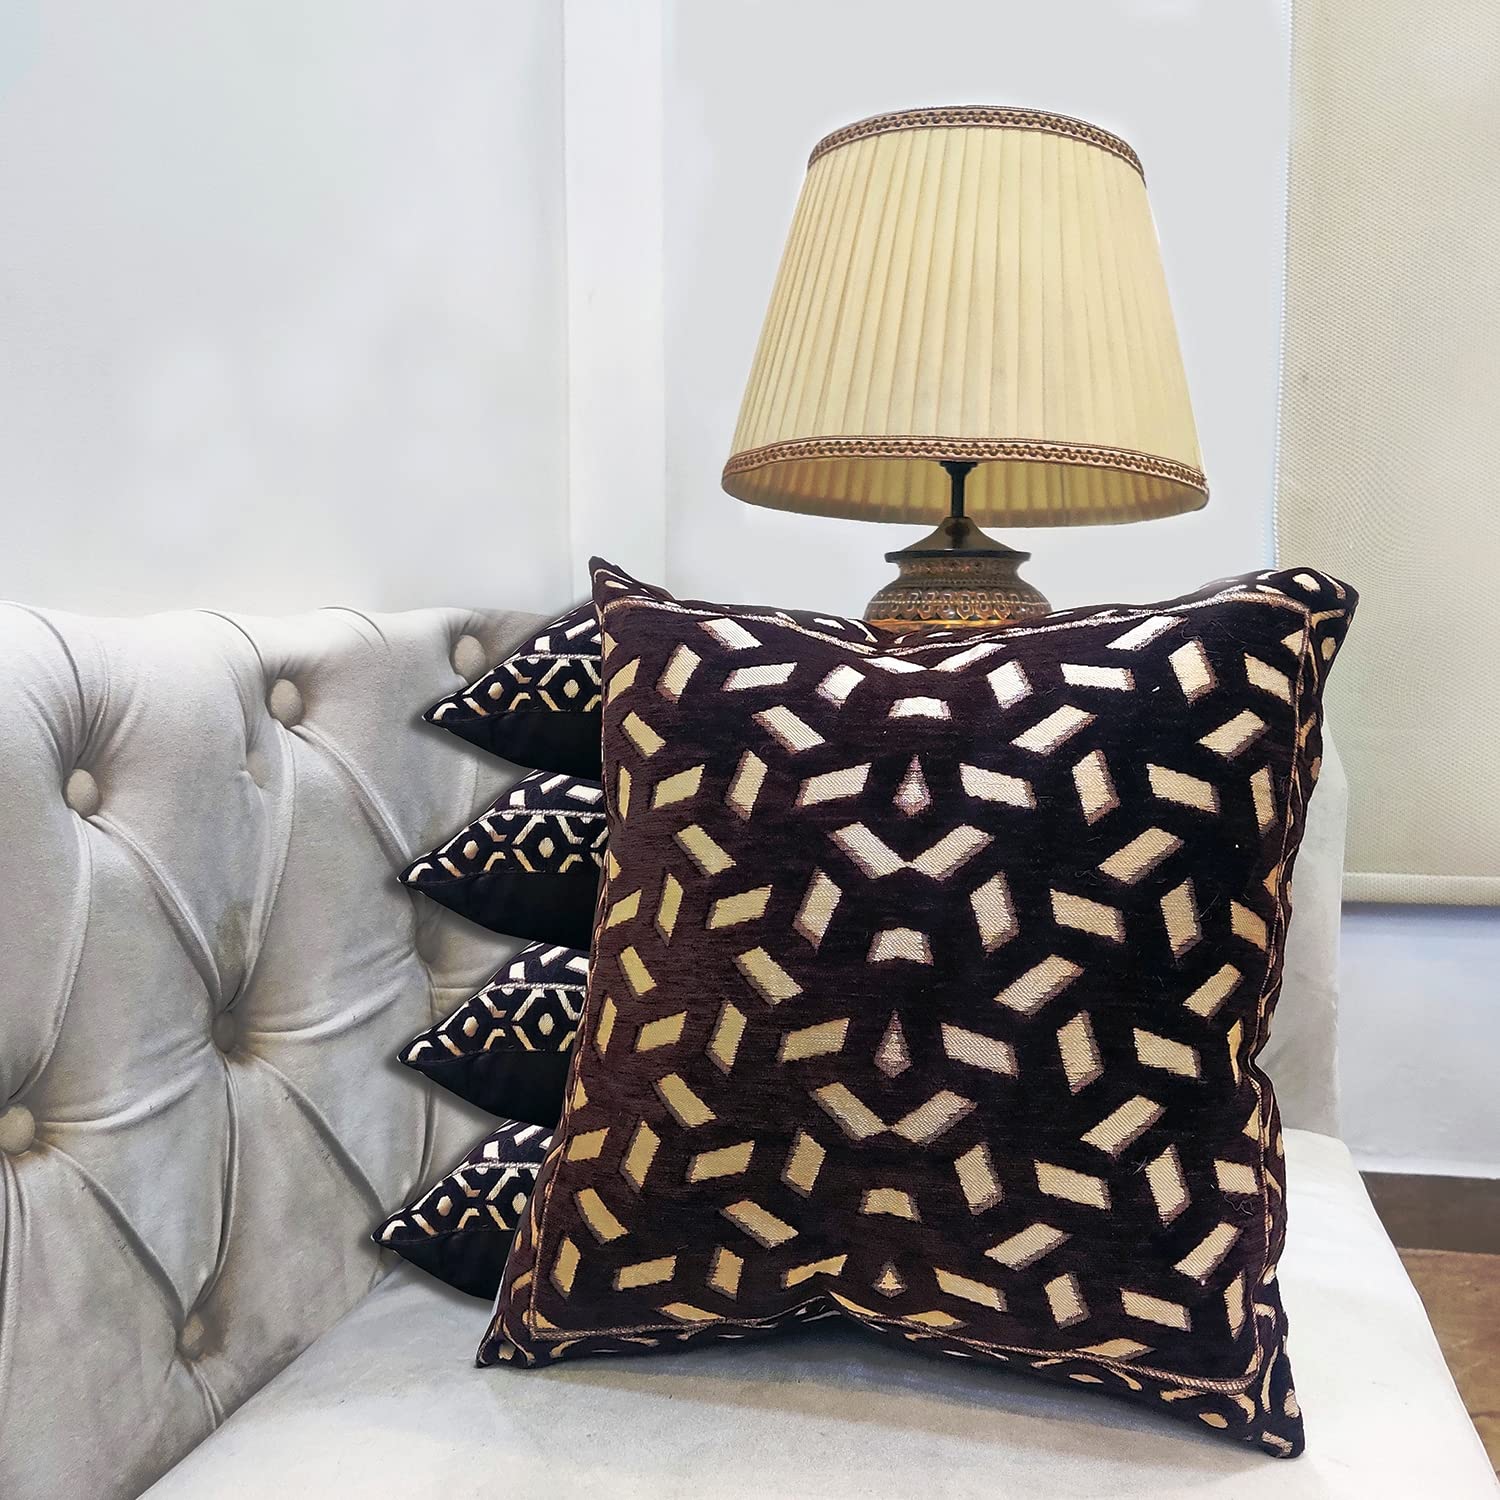 Black Damask Geometric Woven Zipper Square Cushion Covers (16x16 inch or 40 x 40 cm) Set of 5